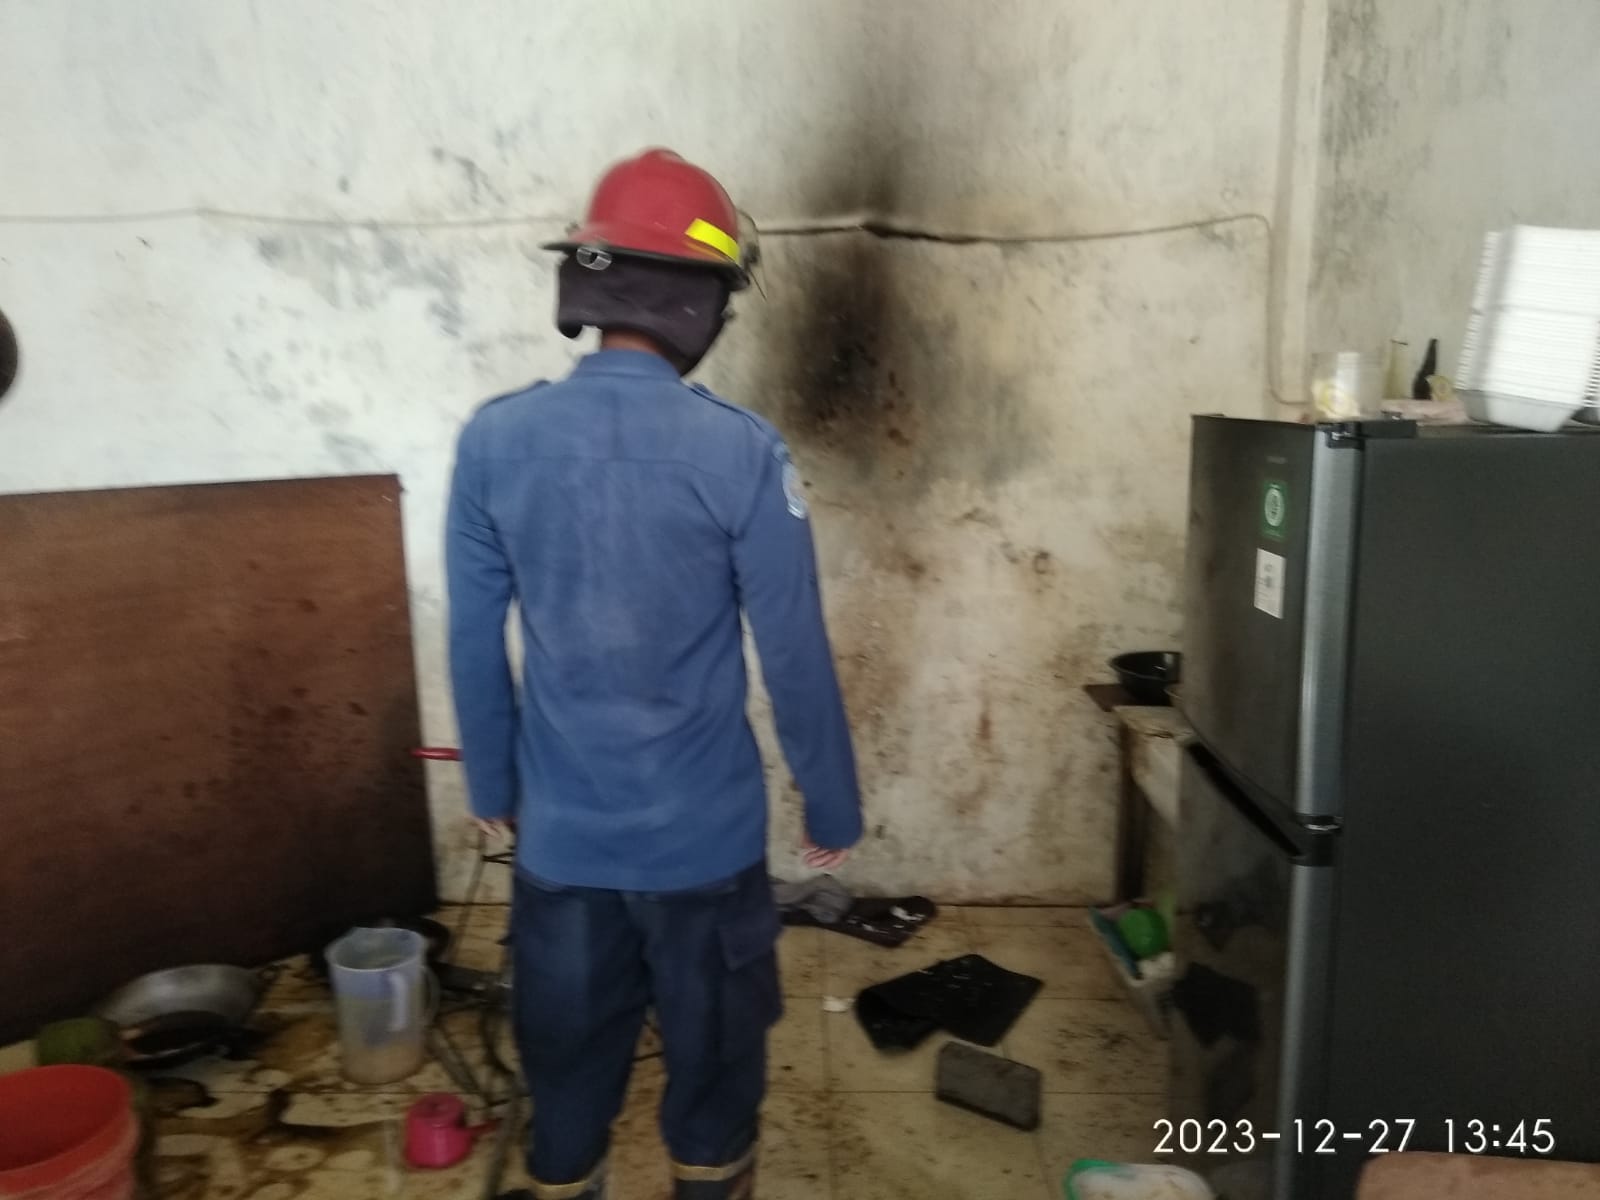  Kebakaran Warung (Kompor Gas) di Jl. Rajawali Desa Betro No.3, Kecamatan Sedati